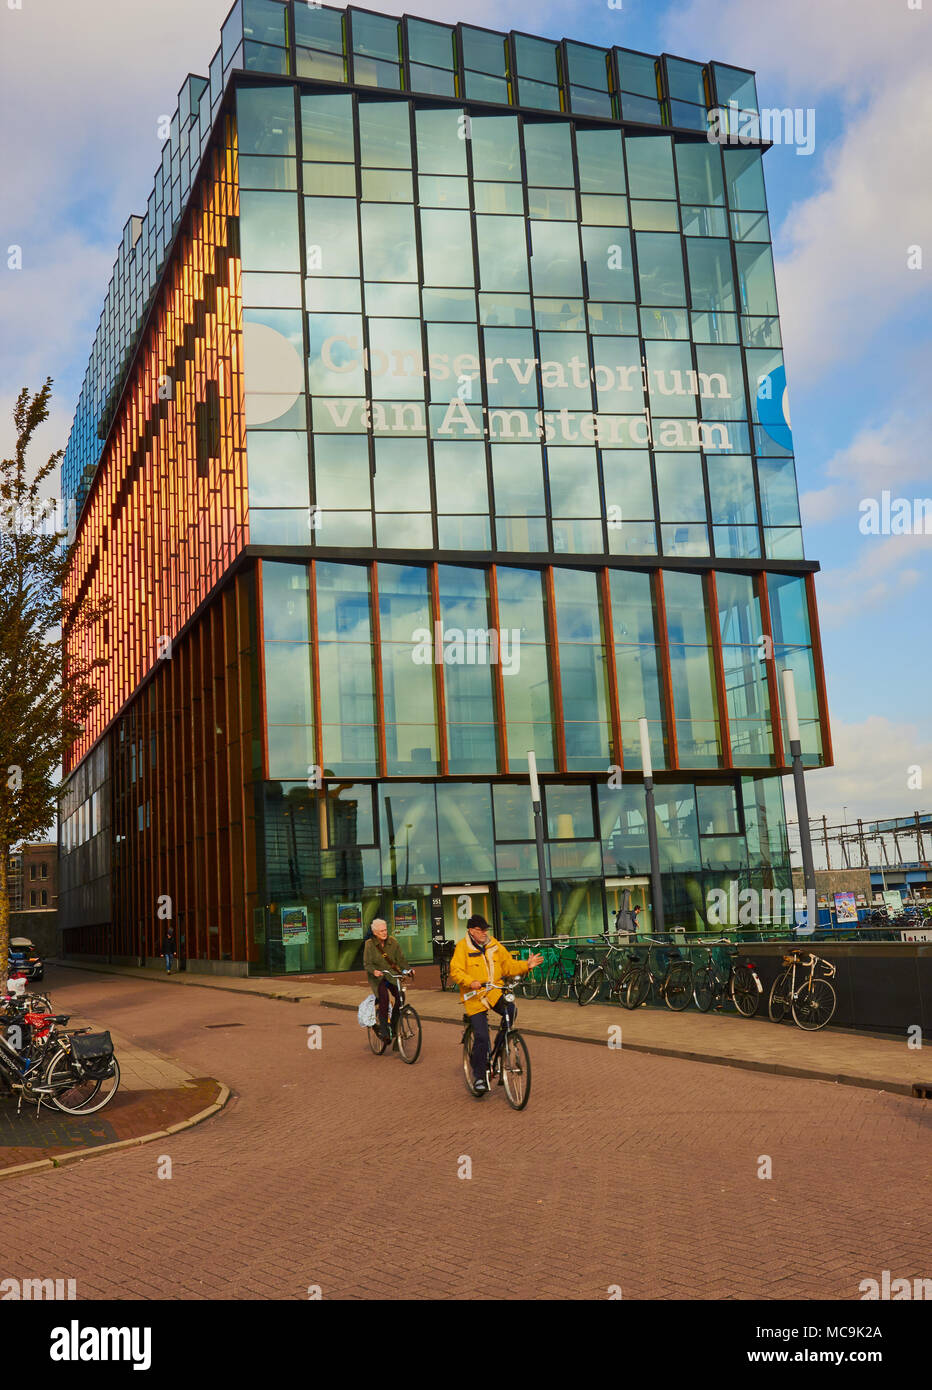 Conservatorium van Amsterdam, Eastern Docklands Oosterdokseiland (), Amsterdam, Pays-Bas. Banque D'Images